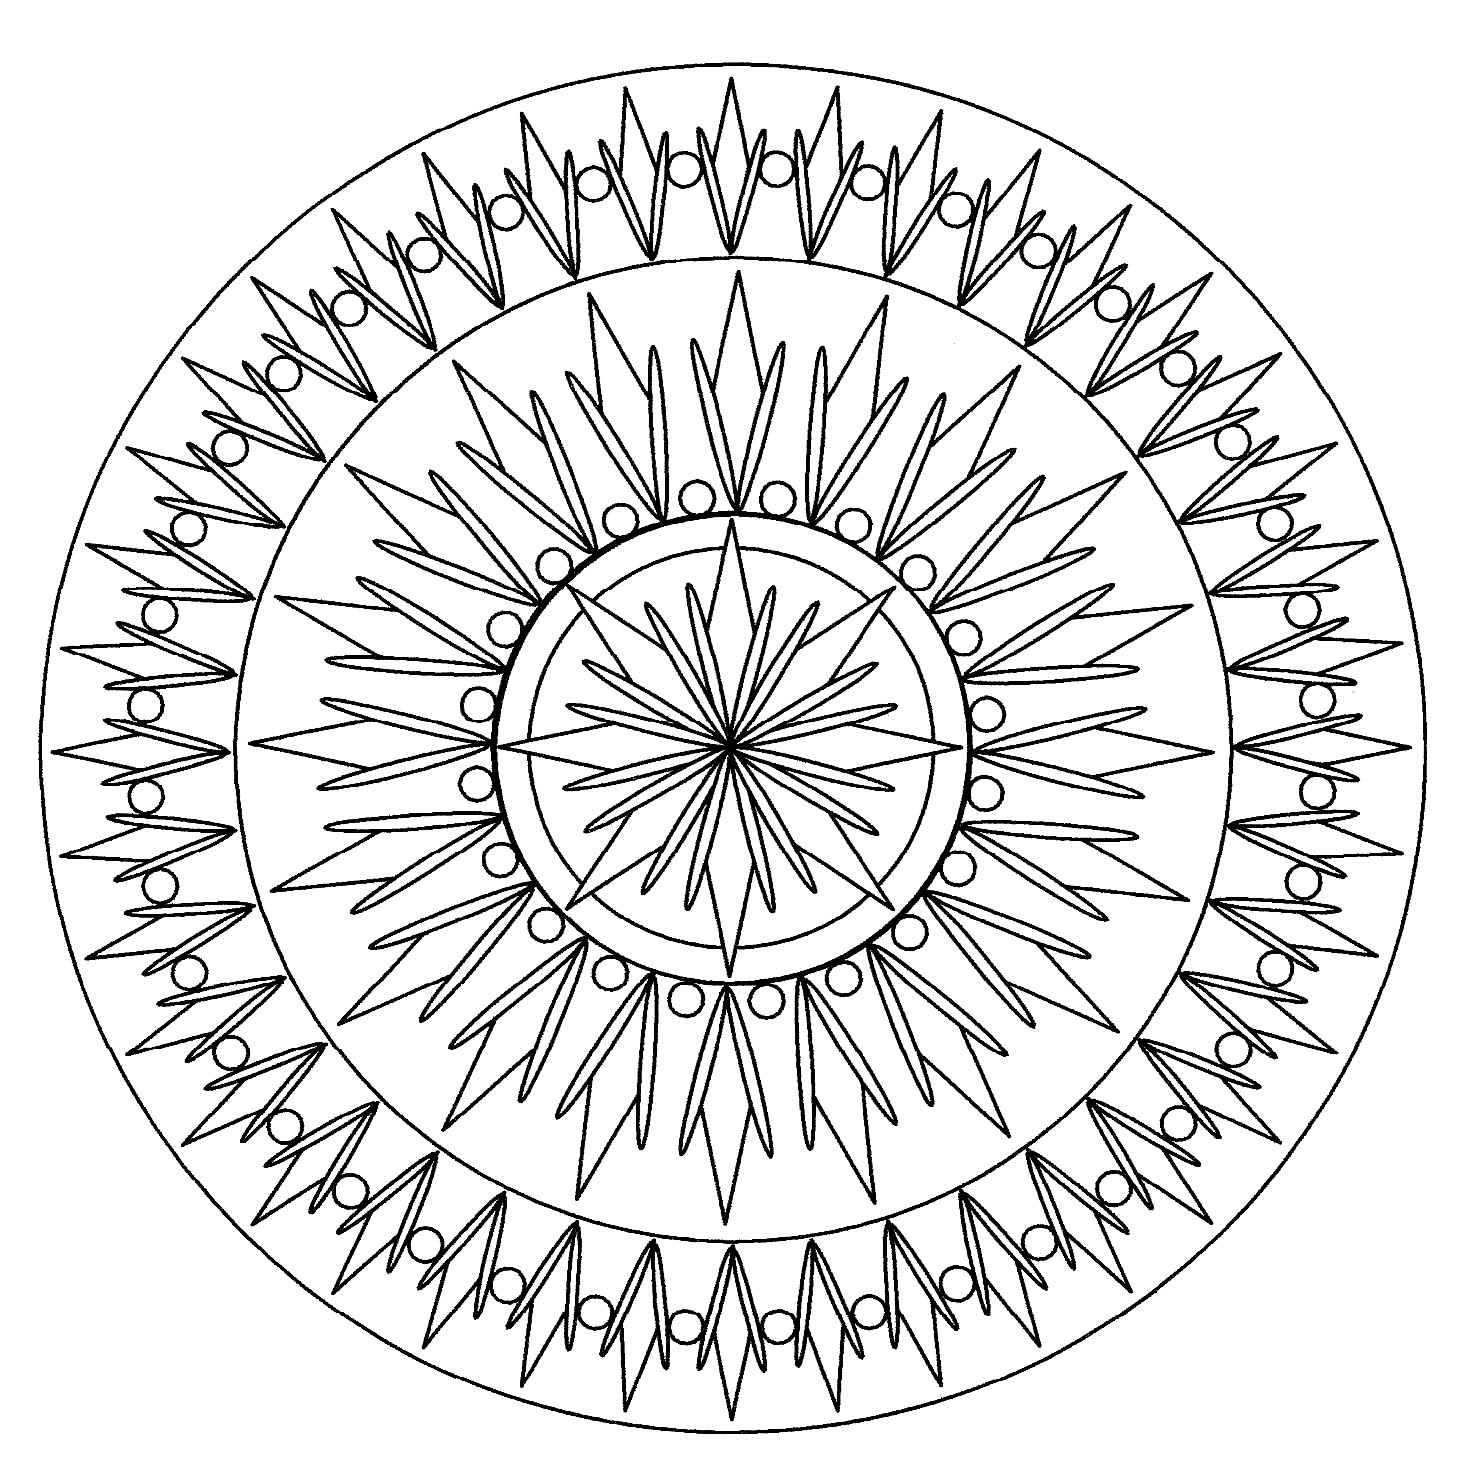 Mandala easy geometry - 2